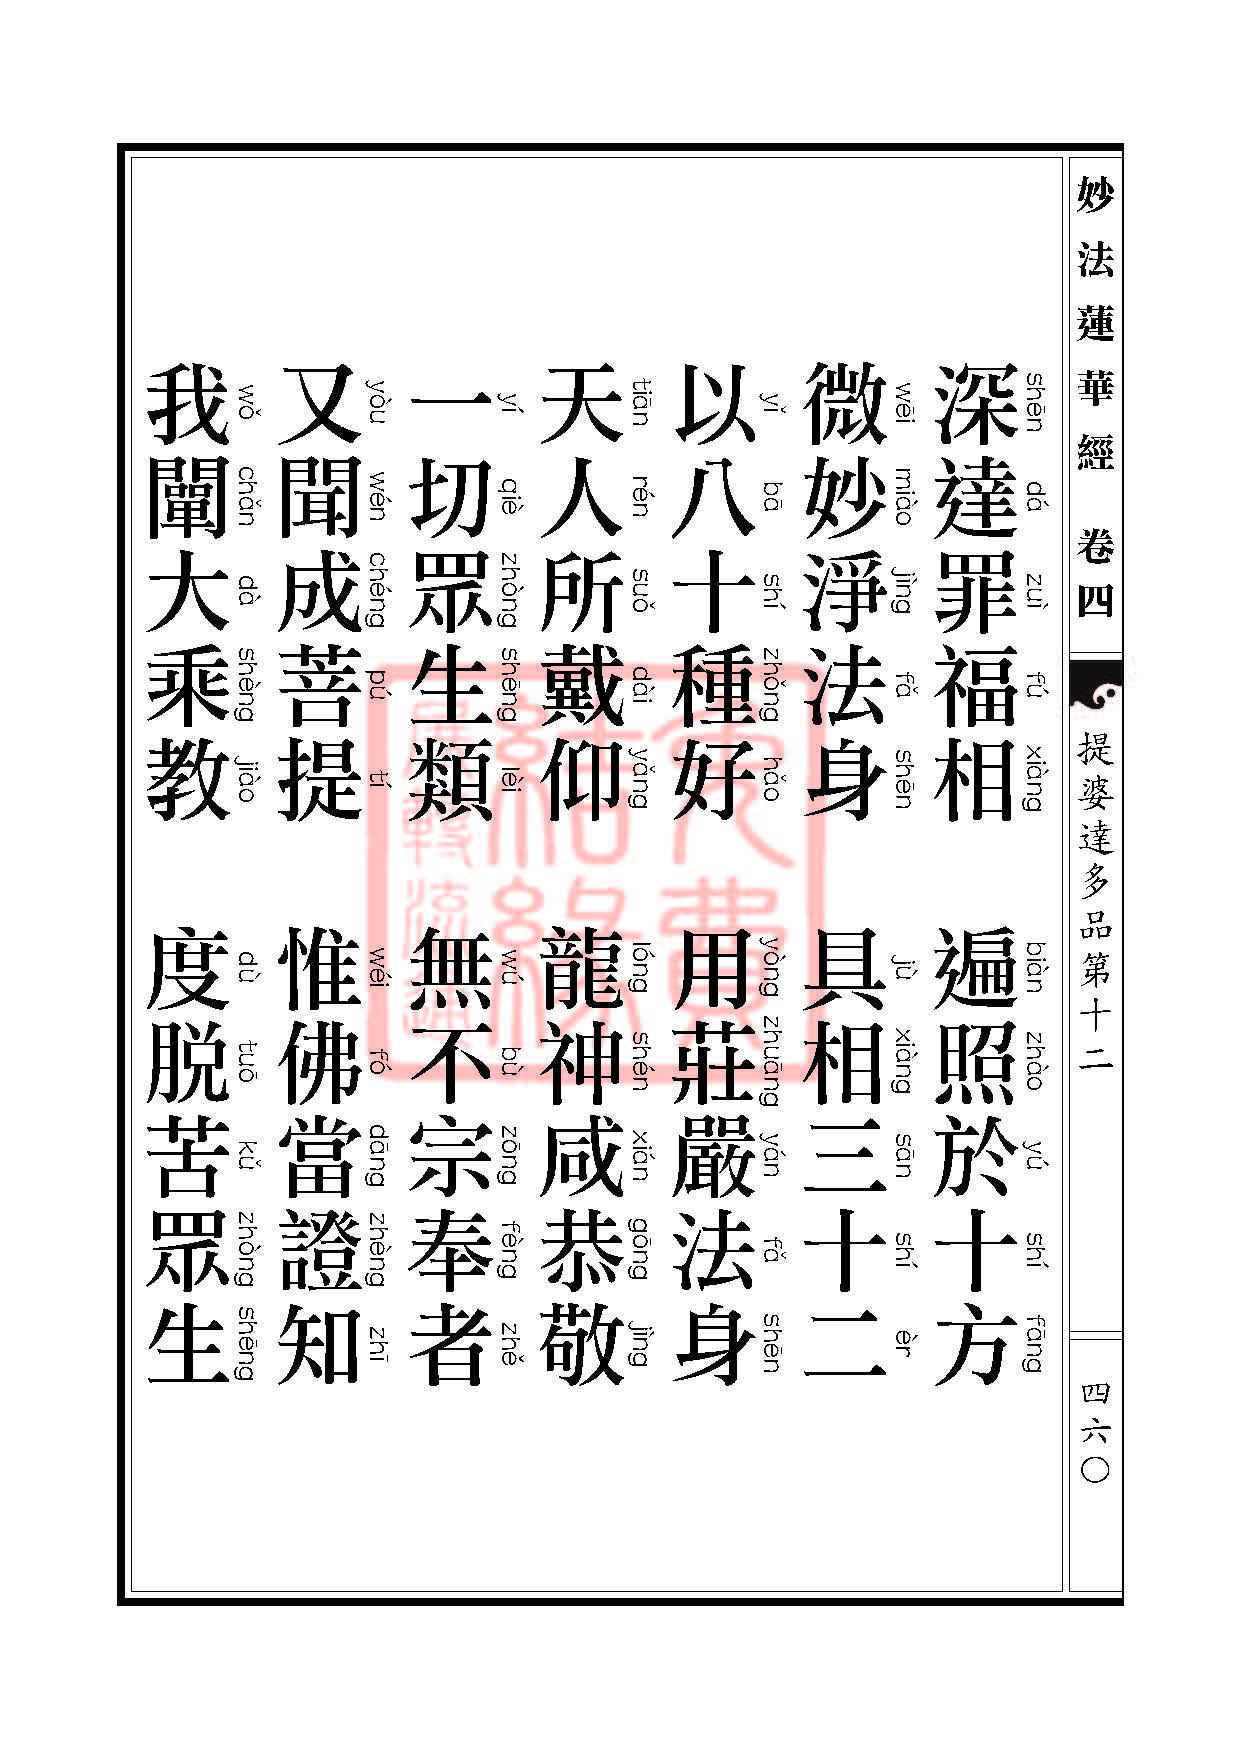 Book_FHJ_HK-A6-PY_Web_ҳ_460.jpg